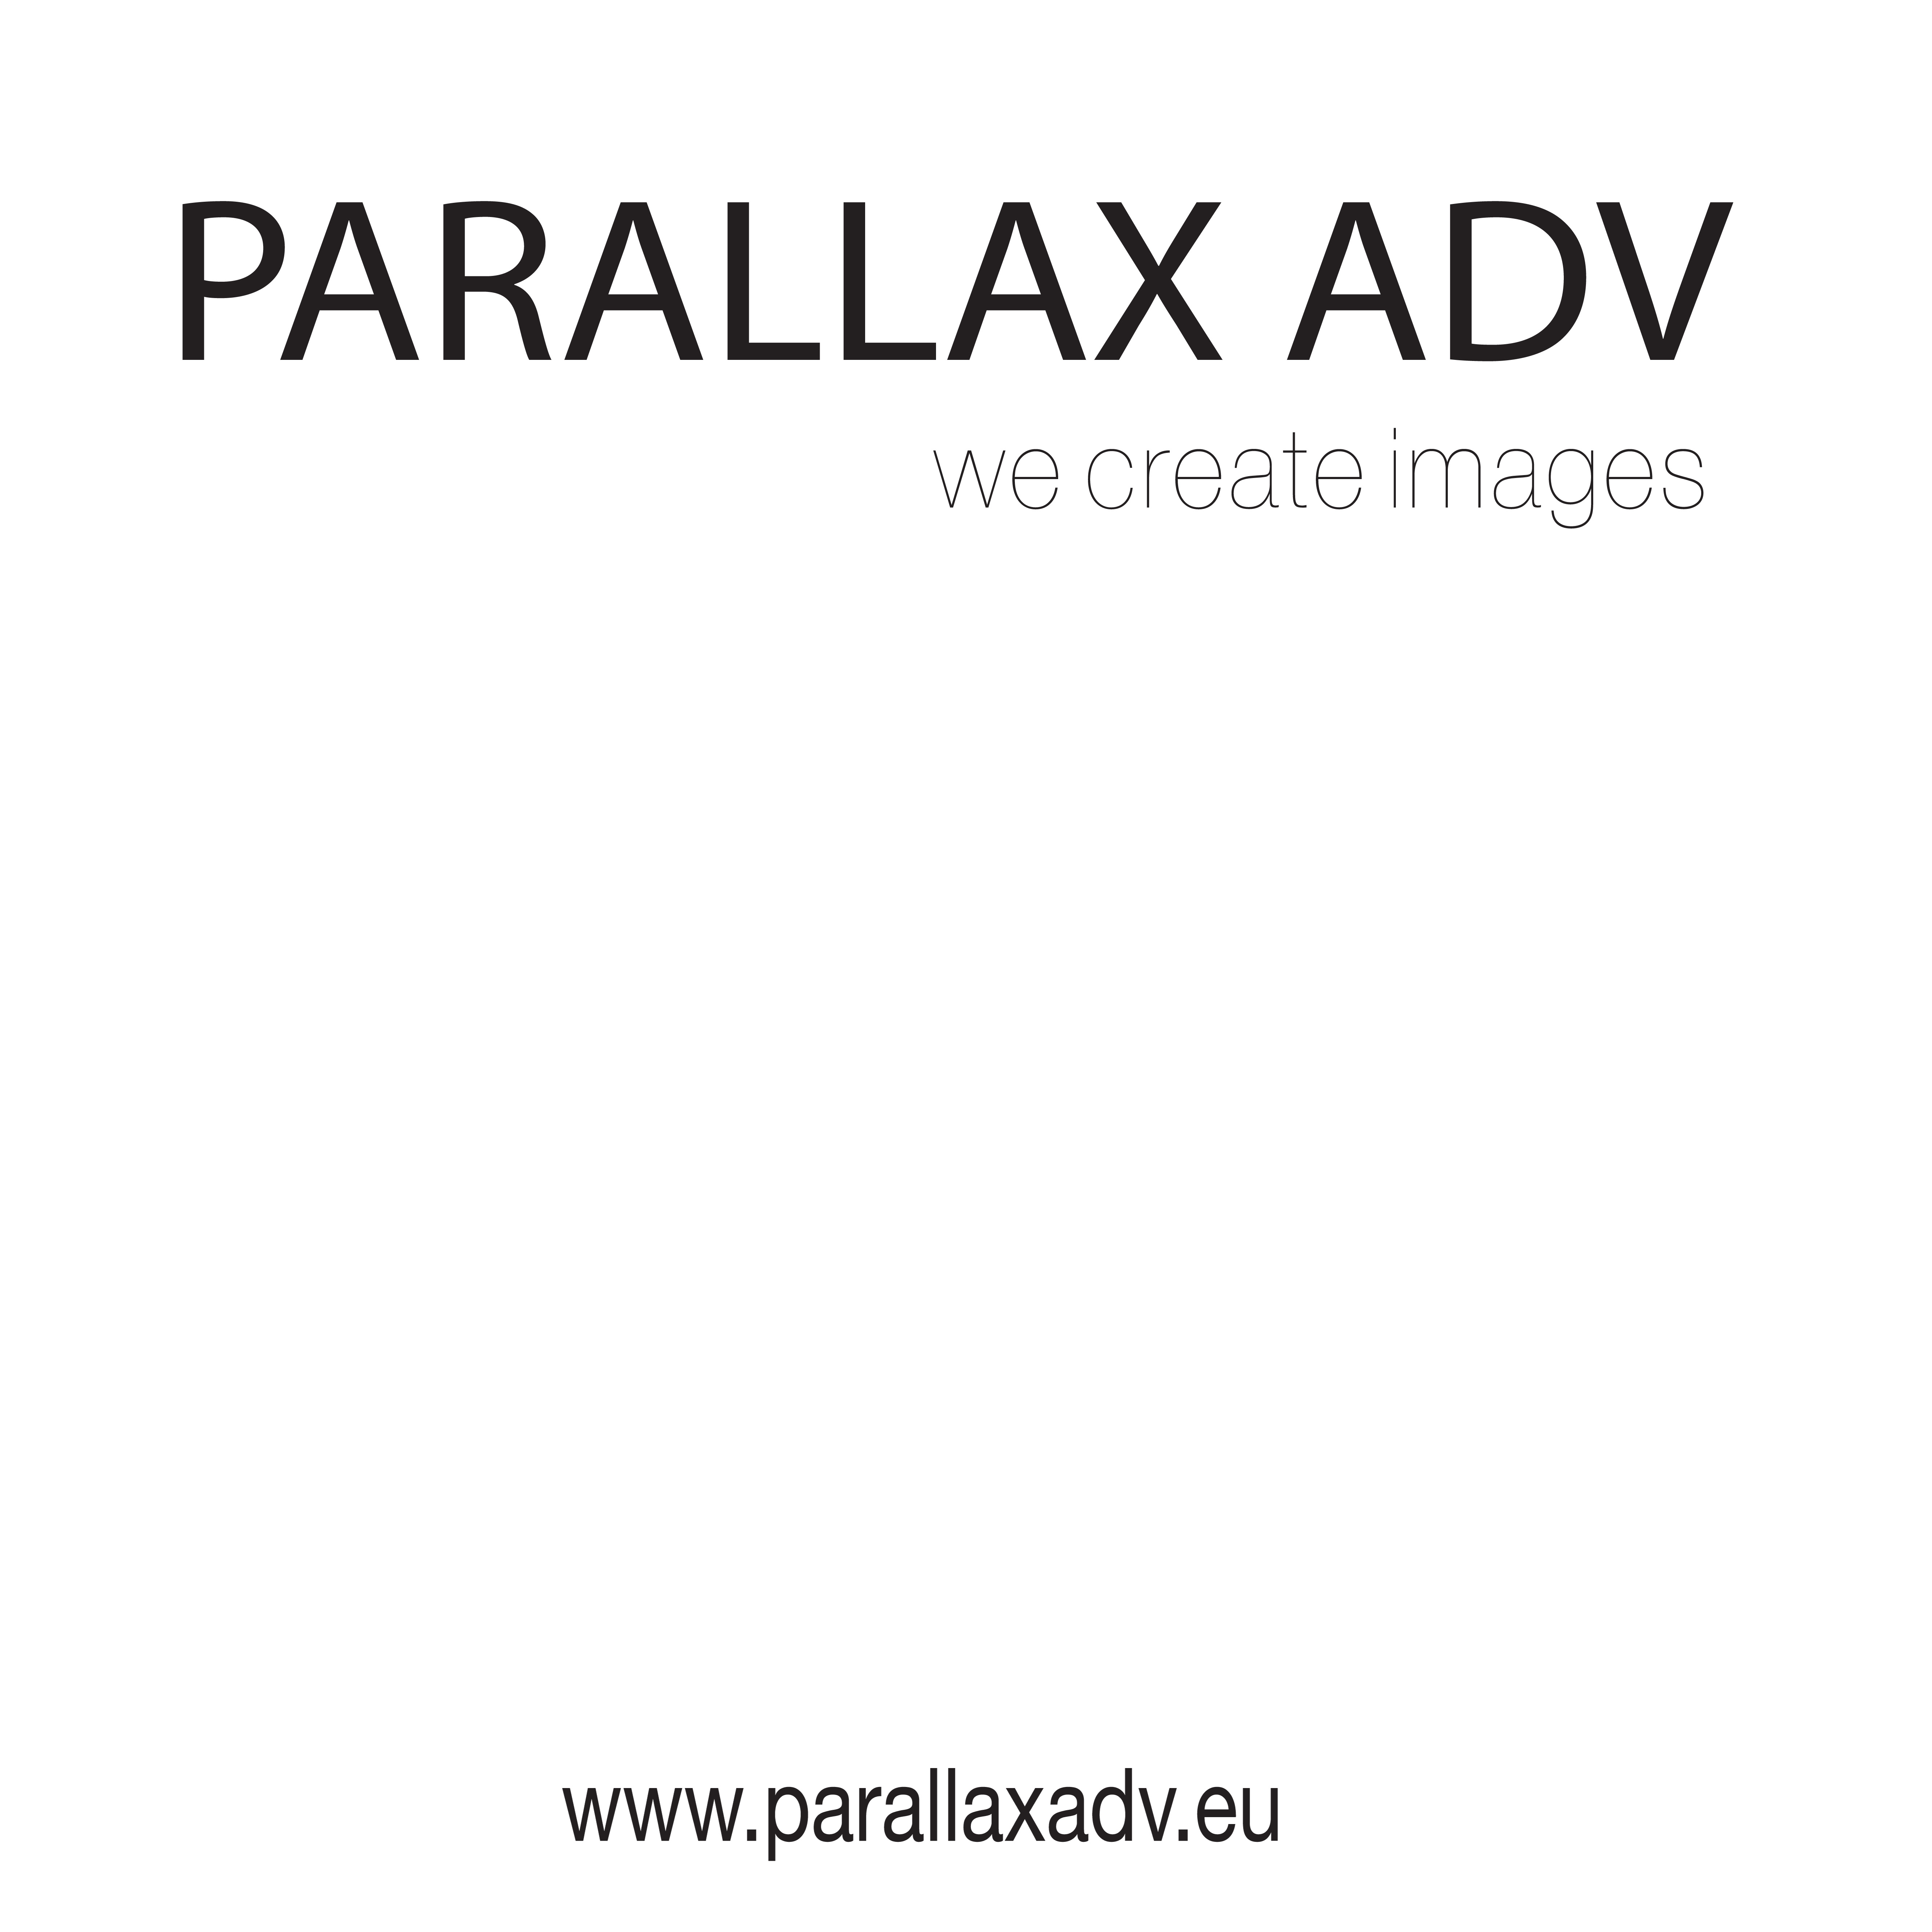 Parallax Adv